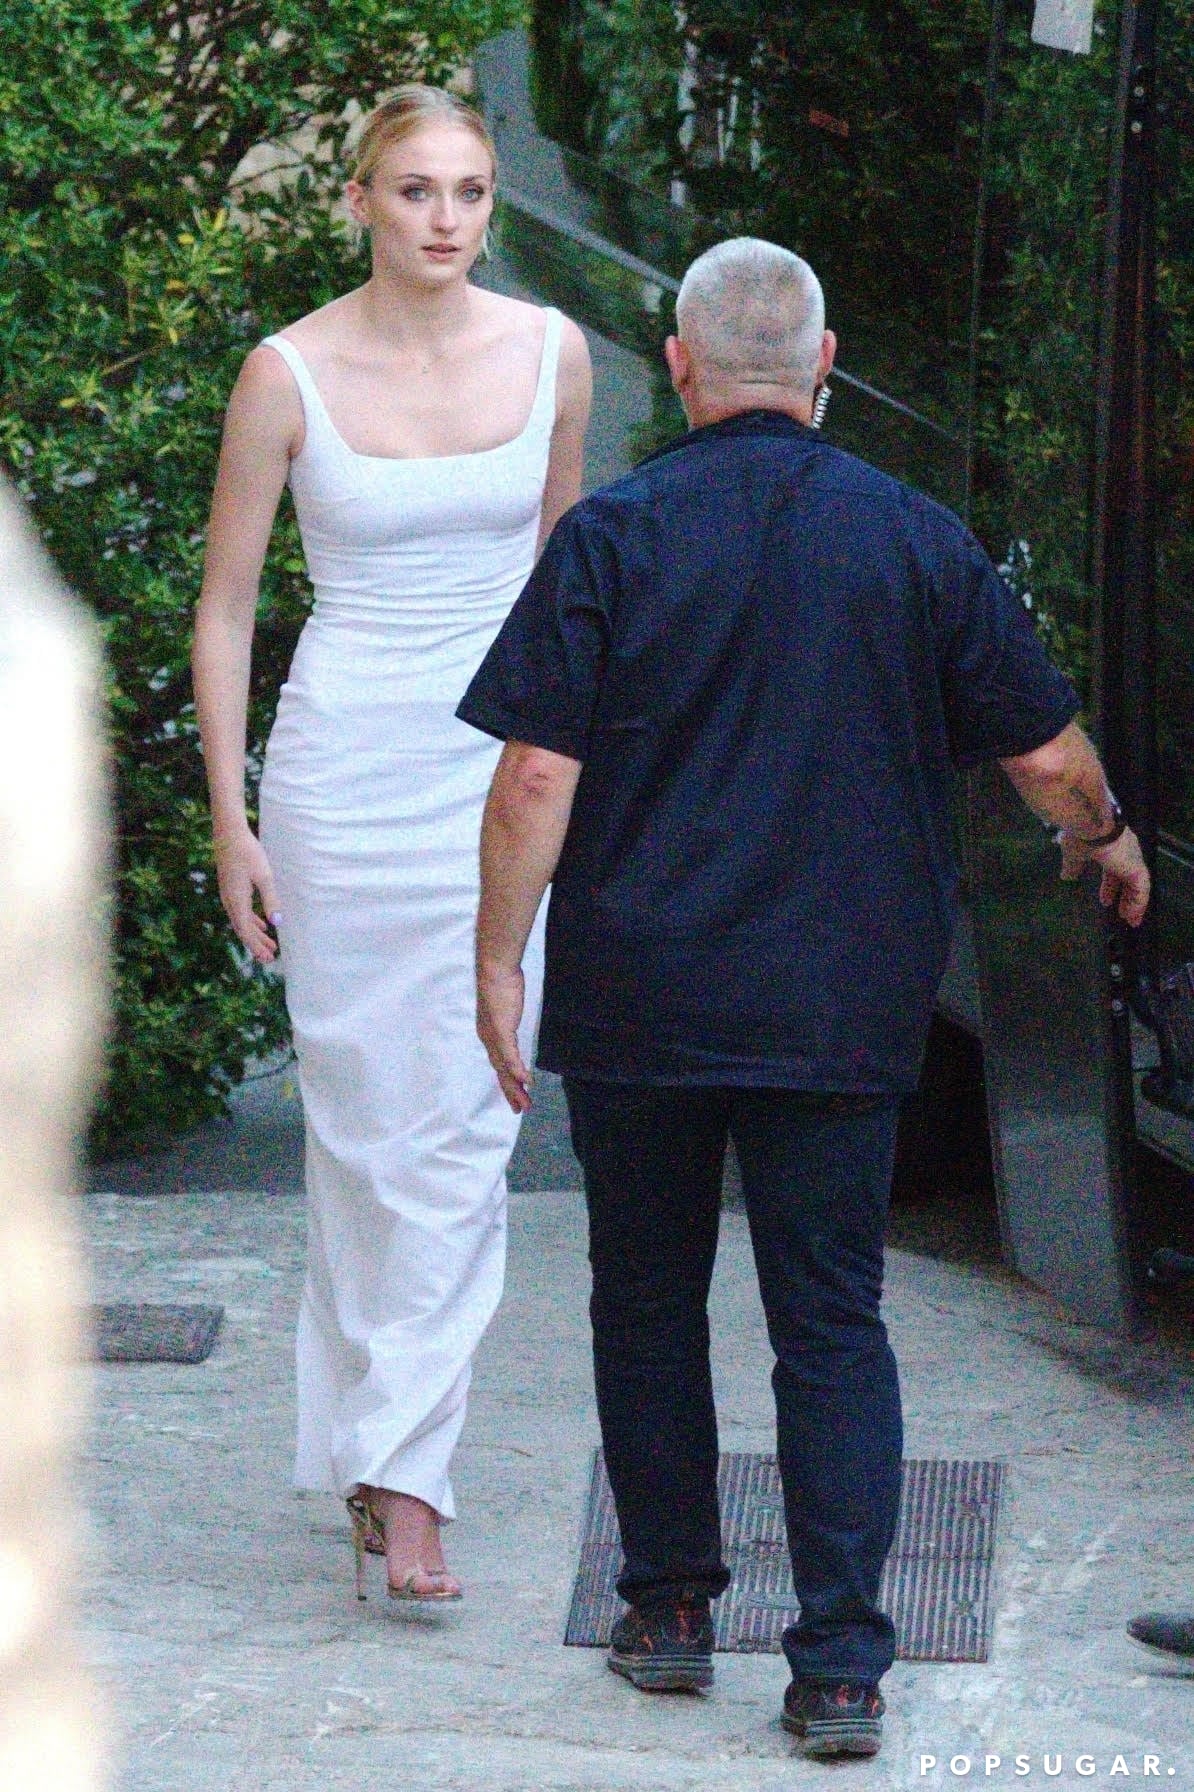 Celebrities Attend Joe Jonas, Sophie Turner Pre-Wedding Party: Pics